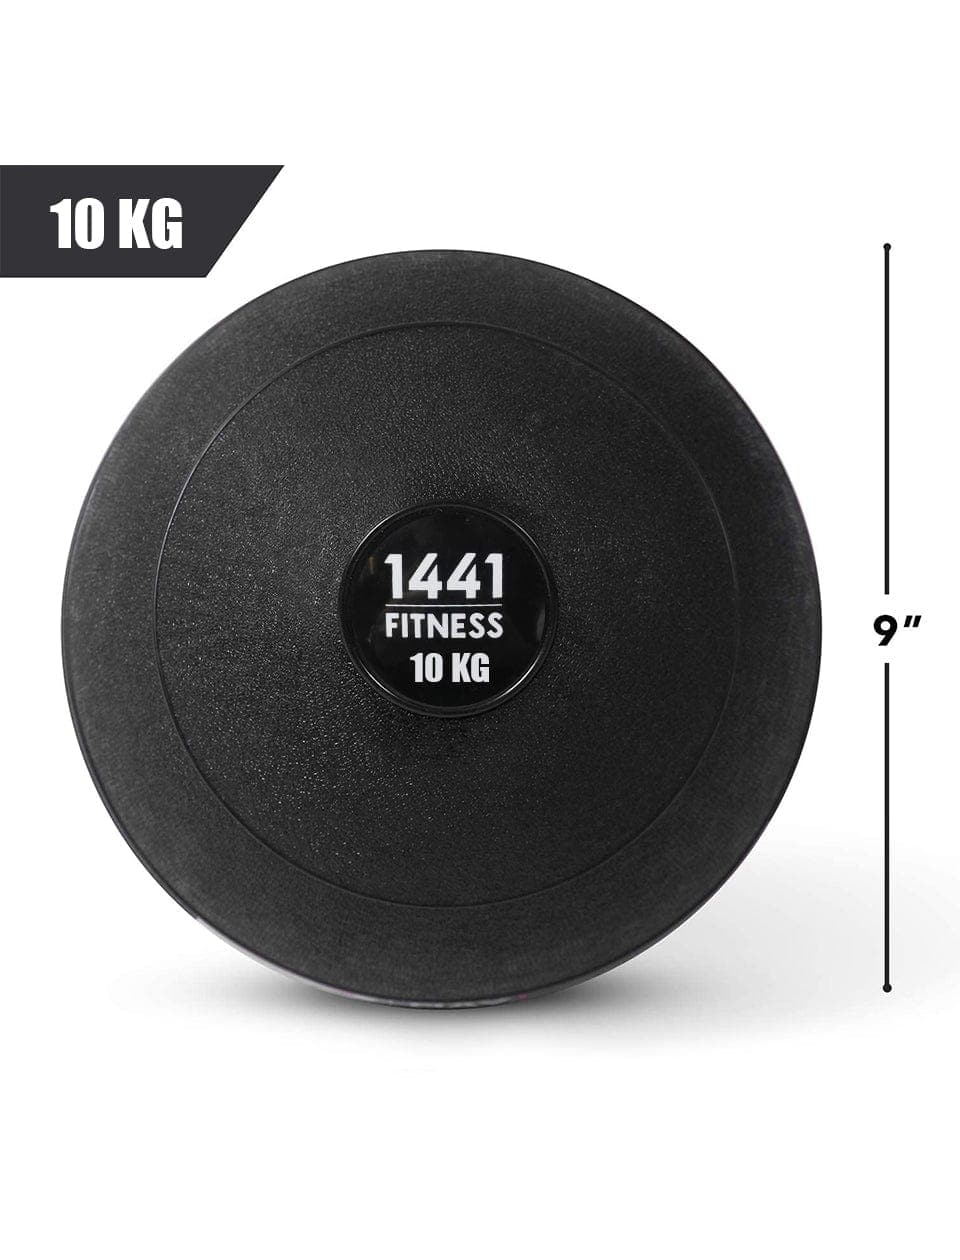 PRSAE Crossfit 10 KG 1441 Fitness Pro Grip Slam Ball - (2 to 20 KG)